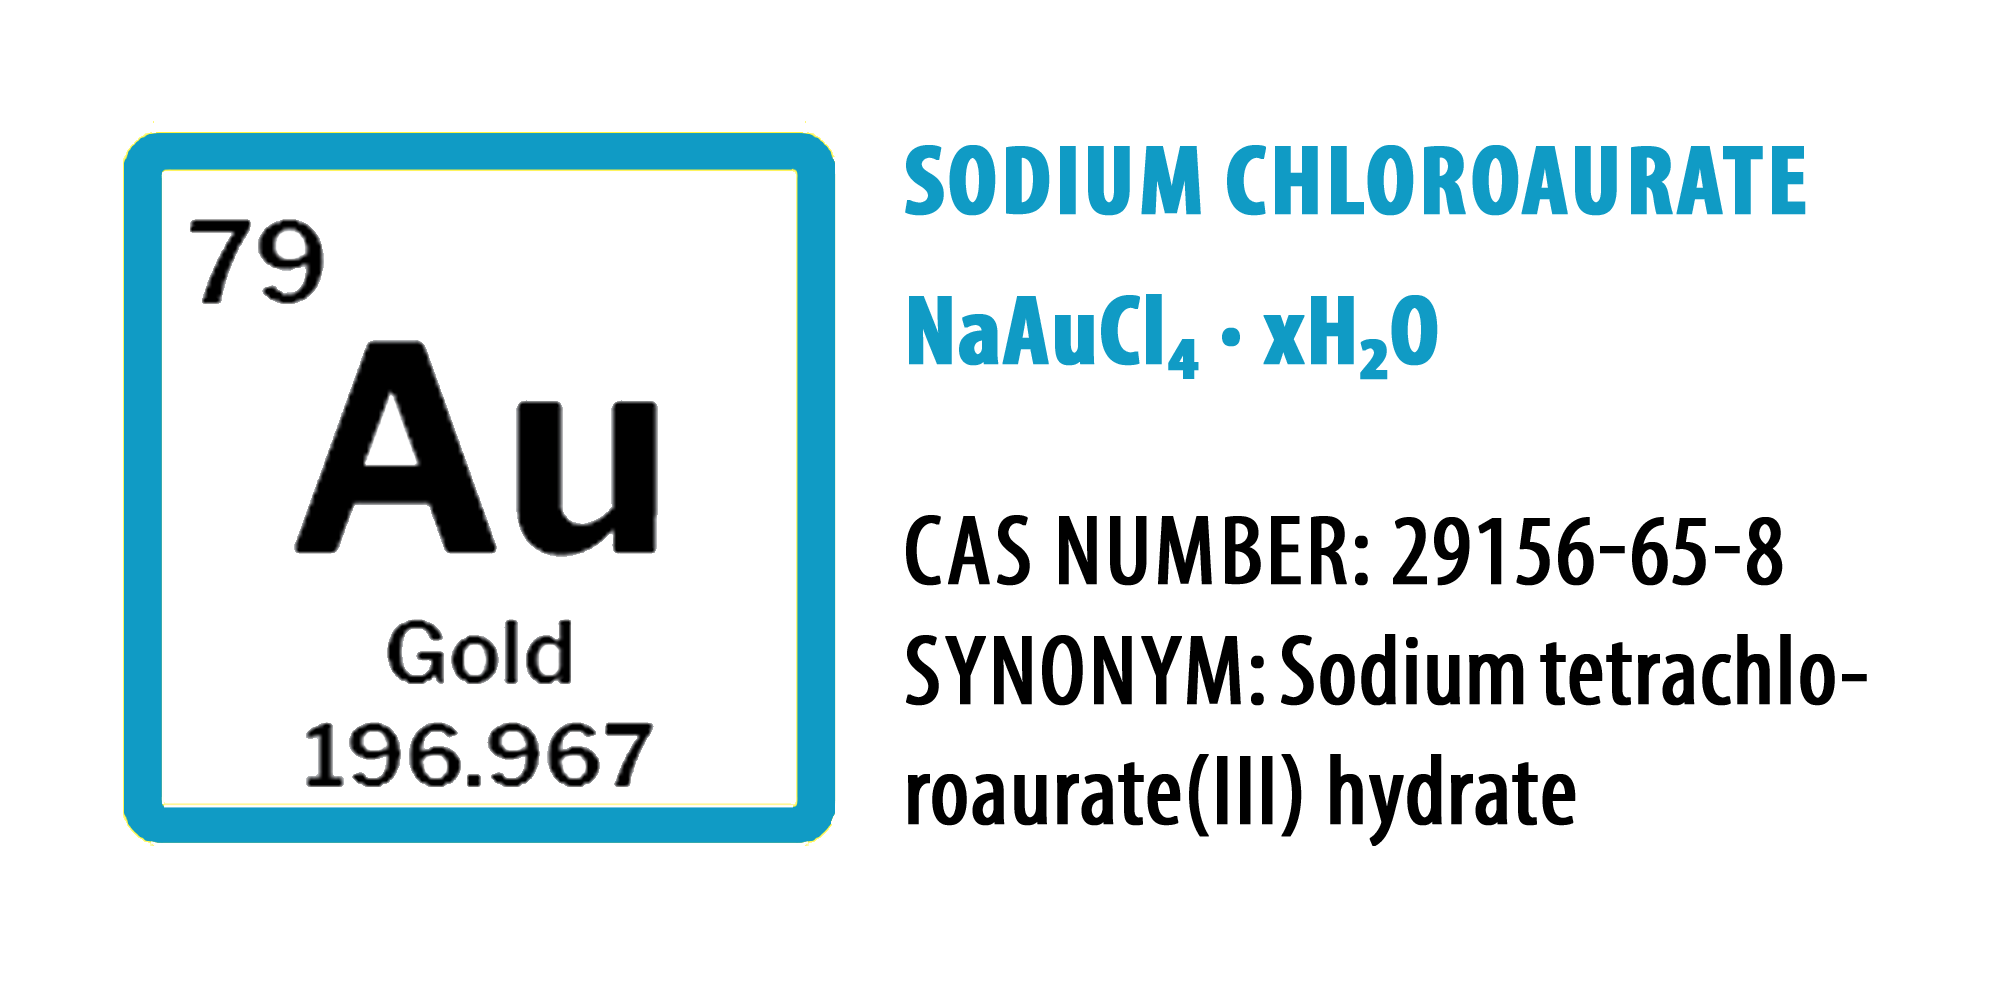 Sodium Chloroaurate